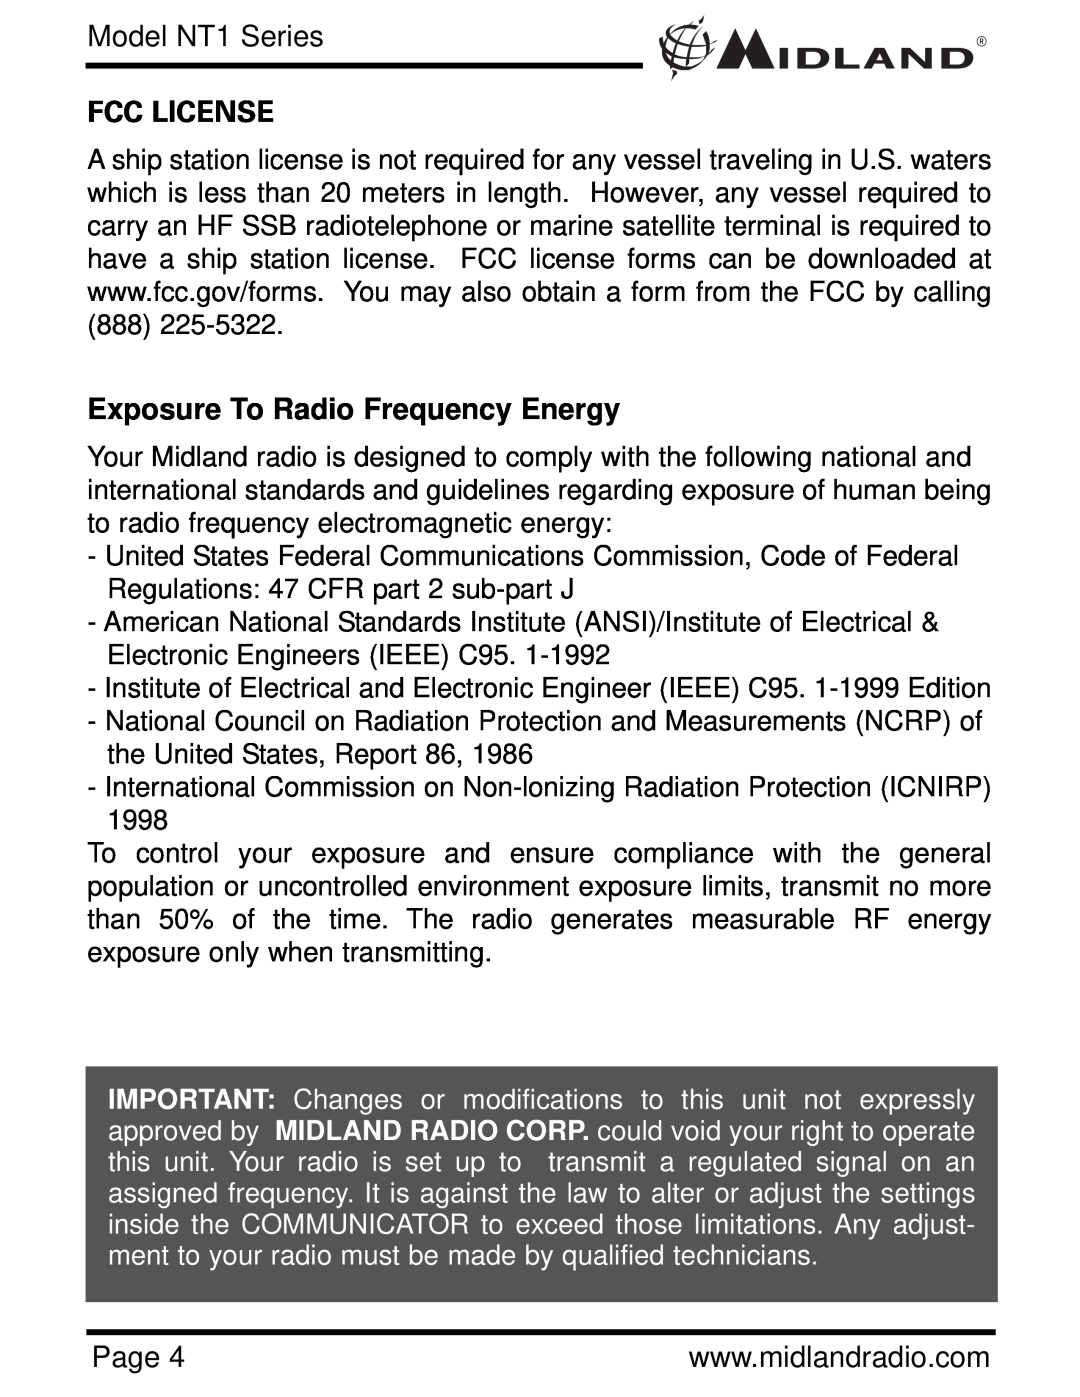 Midland Radio NT1VP, NT1 SERIES owner manual Fcc License, Exposure To Radio Frequency Energy, Model NT1 Series 